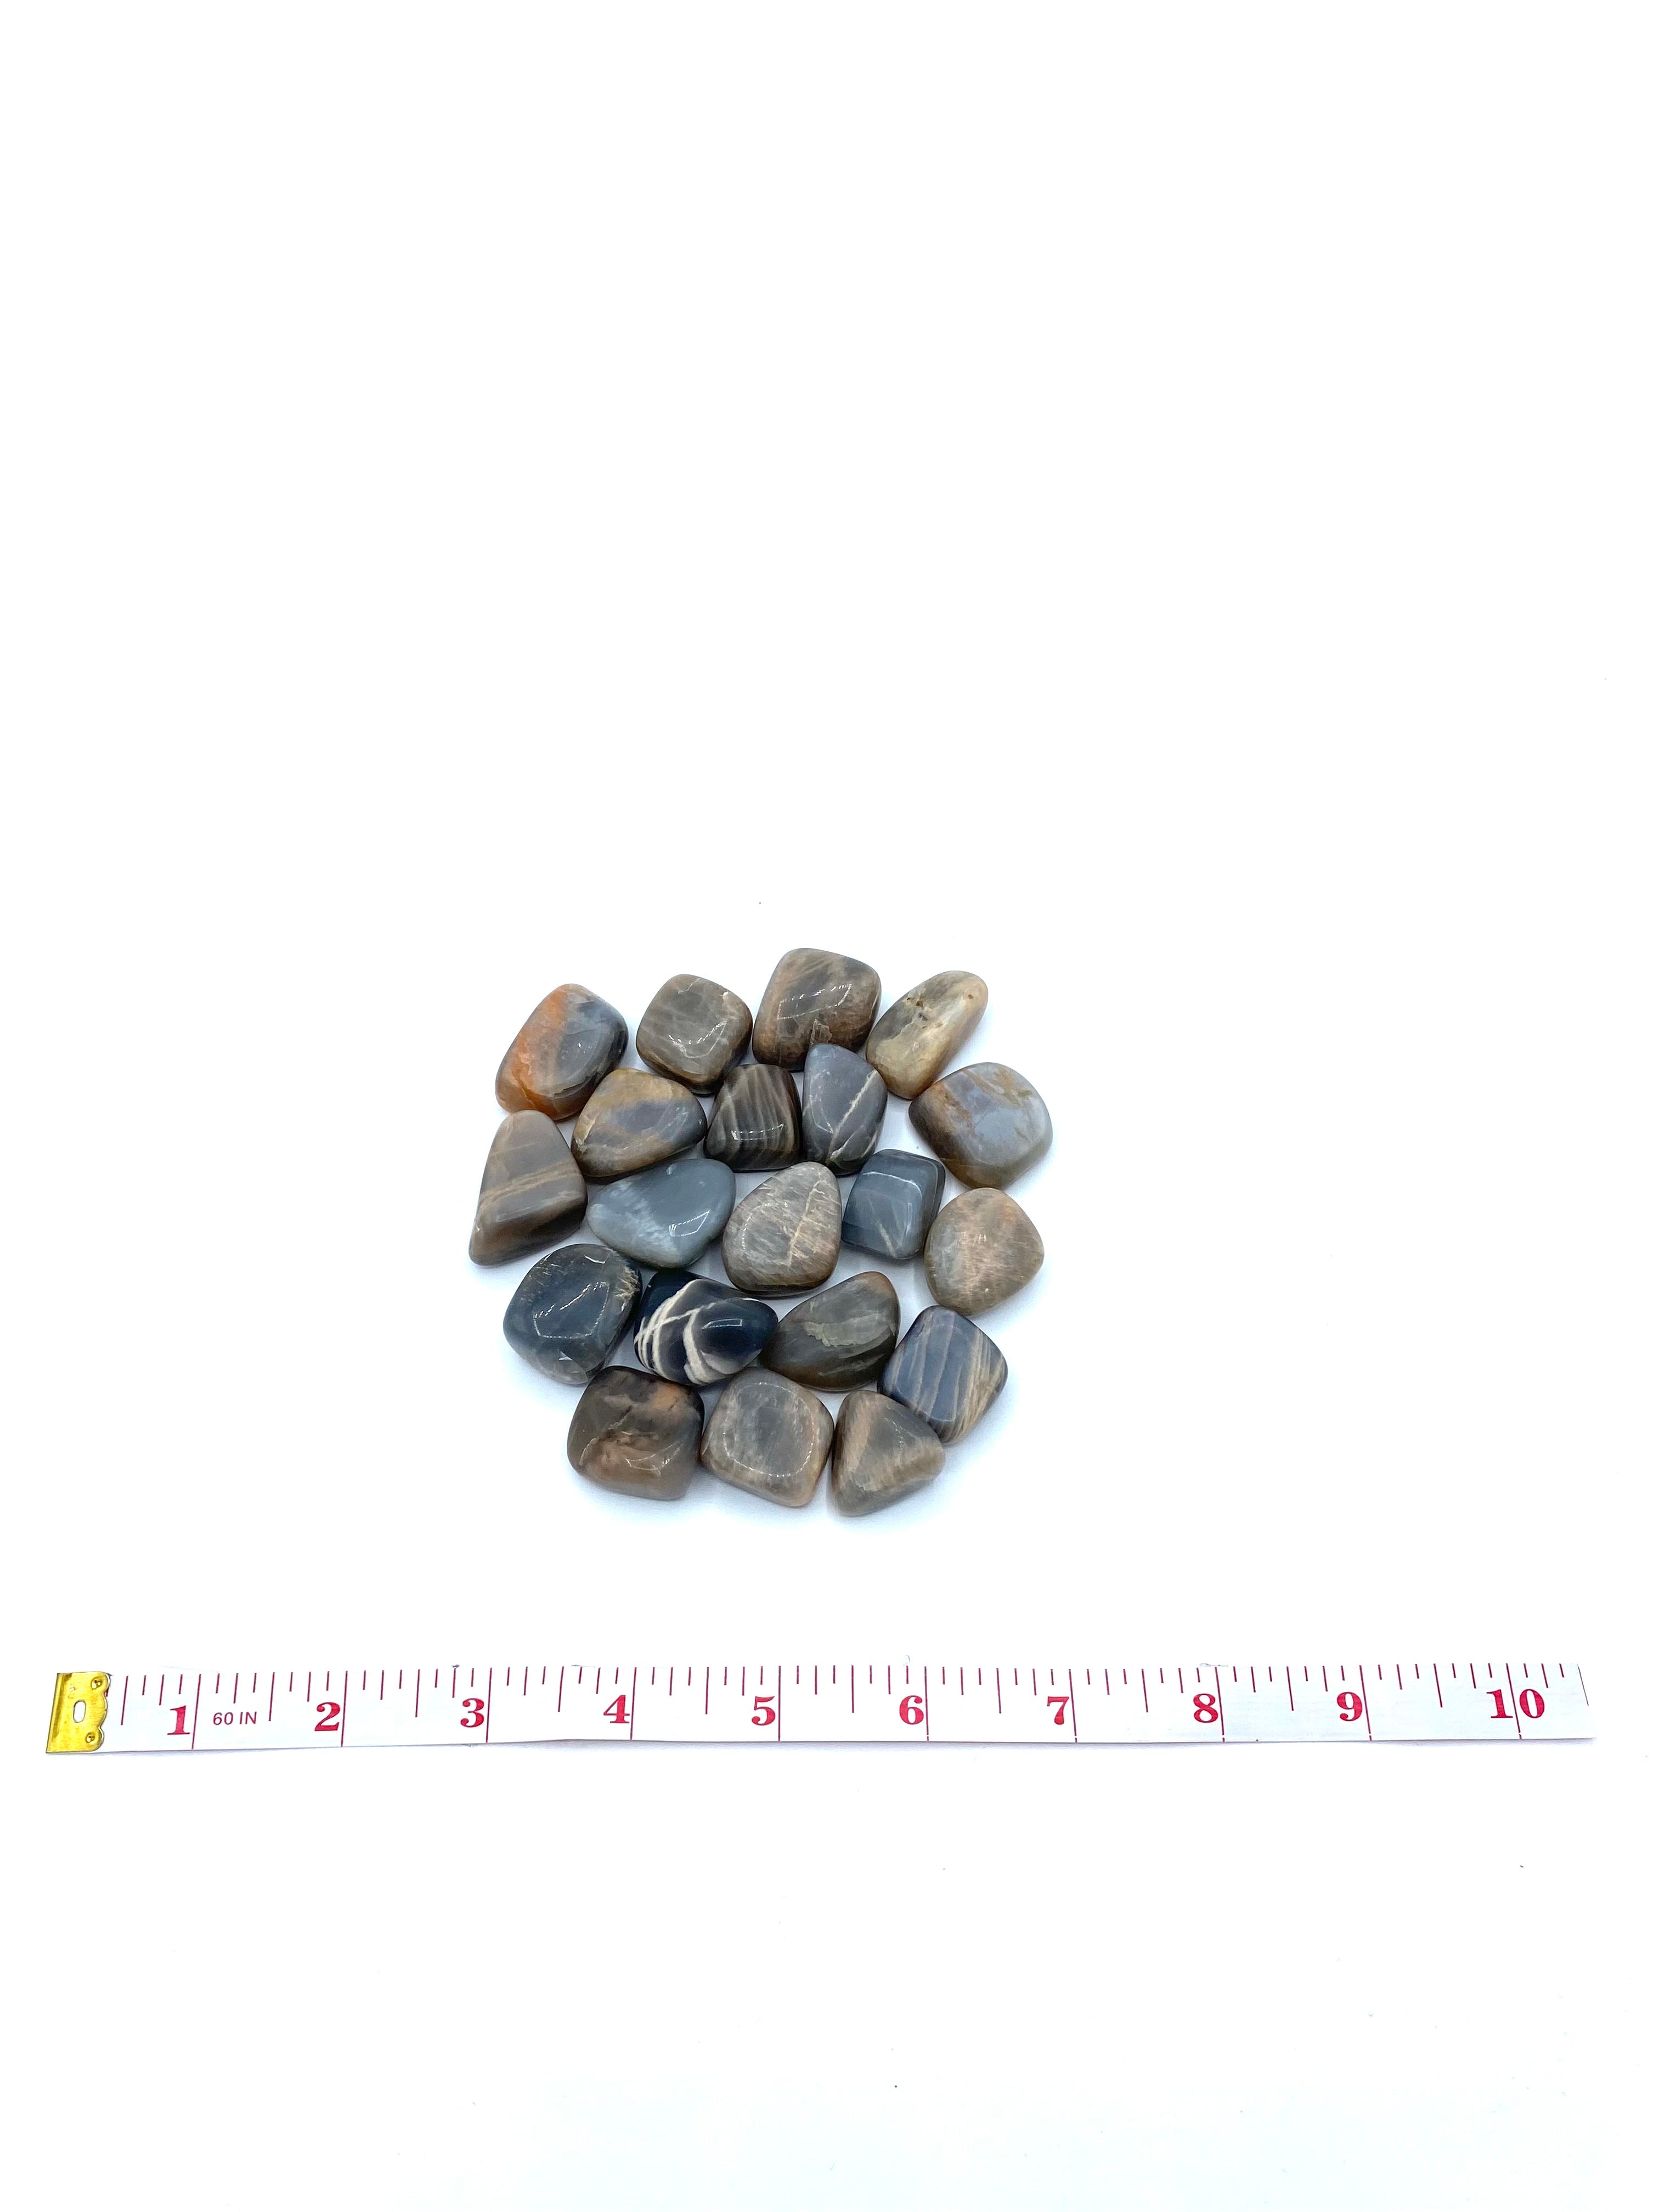 Black Moonstone Tumbled Stones | Wholesale